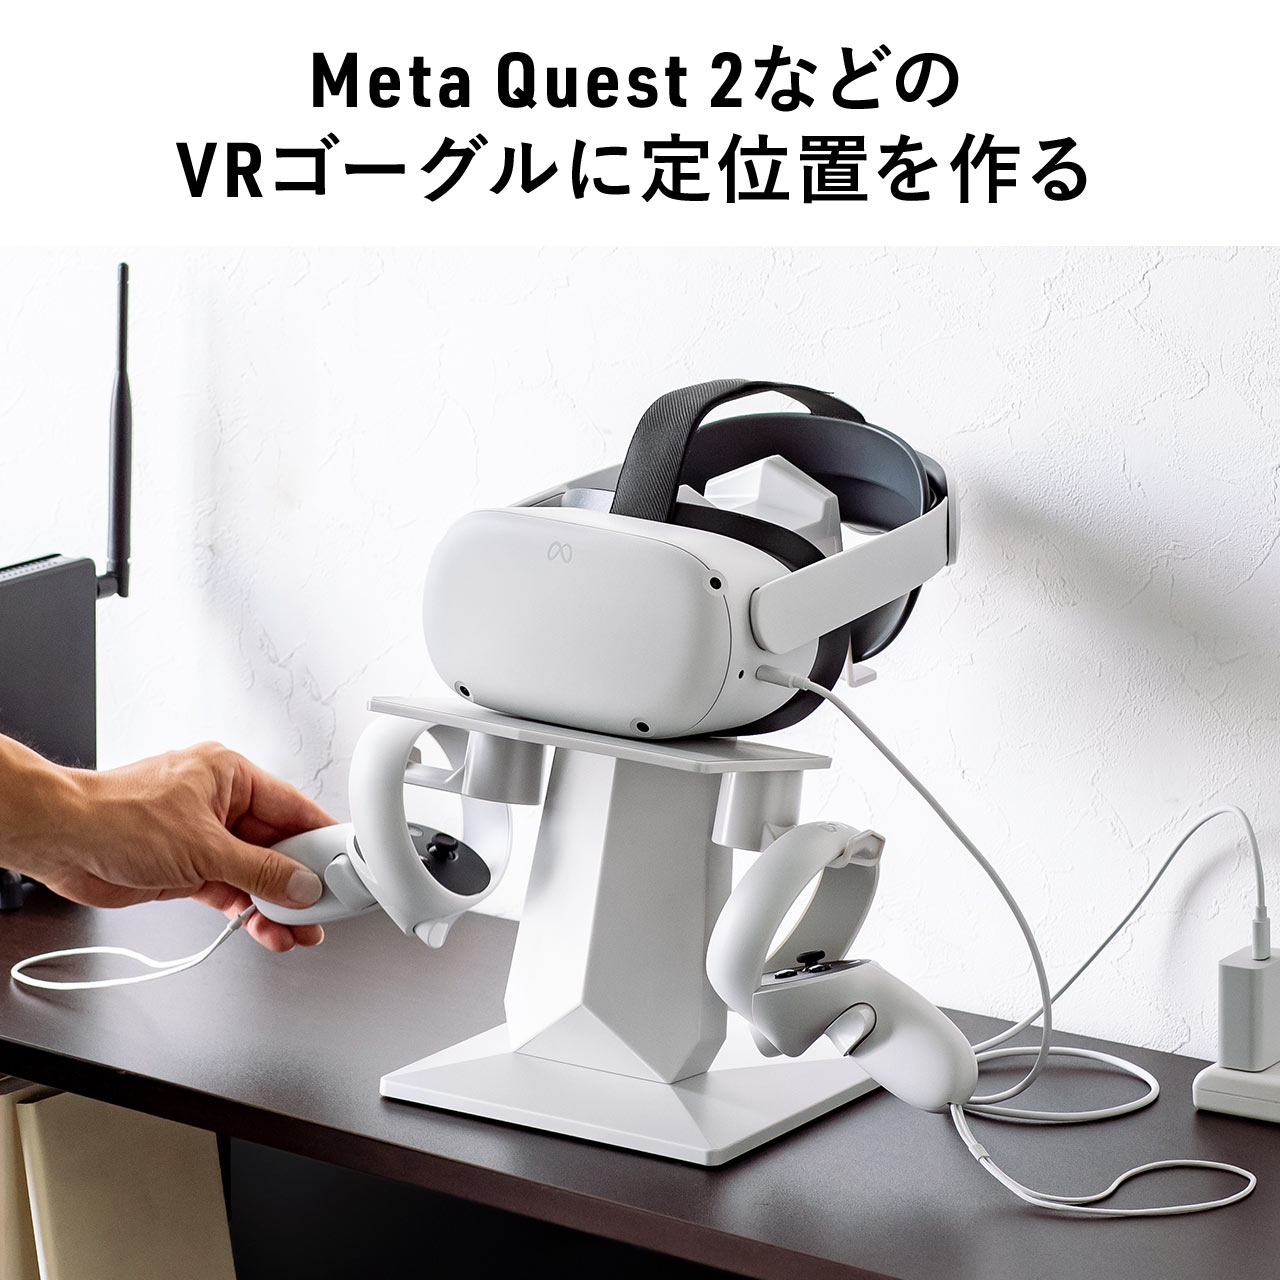 VRヘッドセット スタンド Meta Quest2 収納スタンド VRゴーグル Oculus Rifss Valve Index HTC Vive PSVR対応 メタクエスト2 200-STN071｜sanwadirect｜02